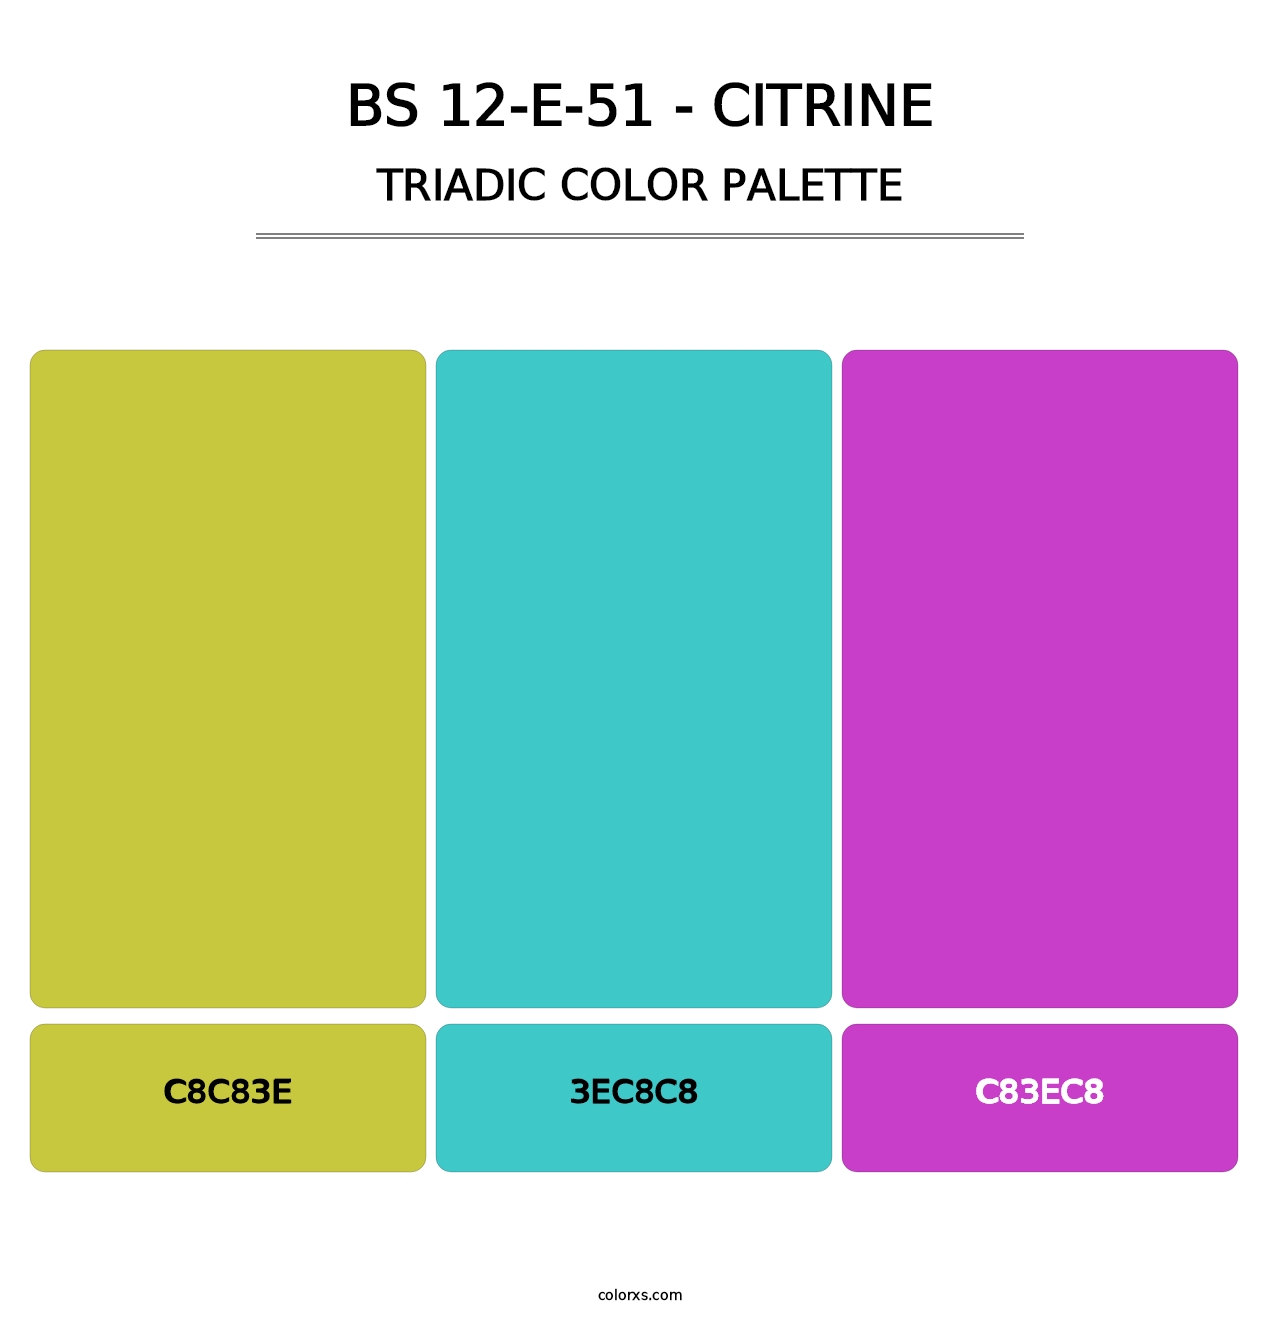 BS 12-E-51 - Citrine - Triadic Color Palette